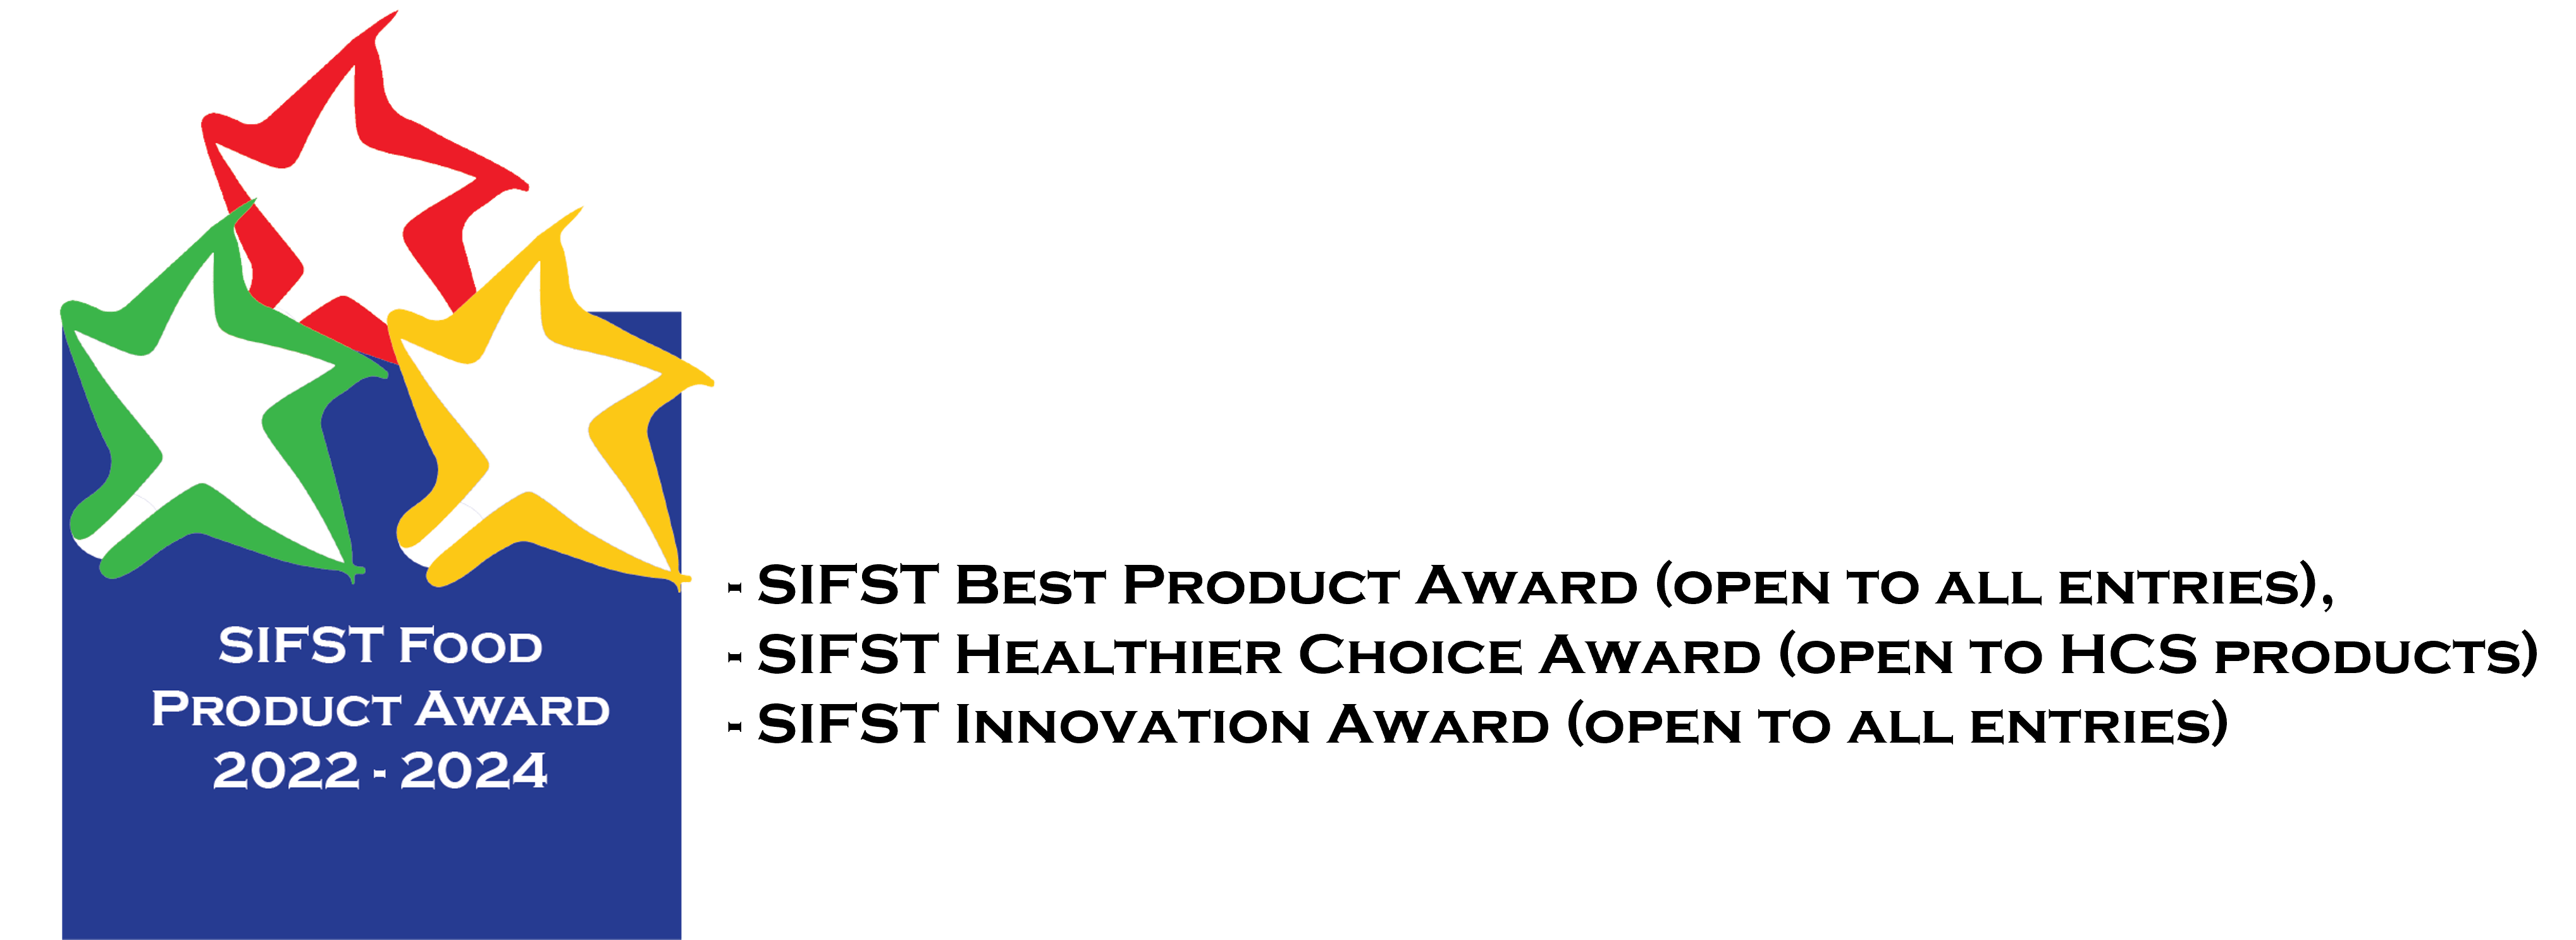 Food Product Award 2022 - 2024